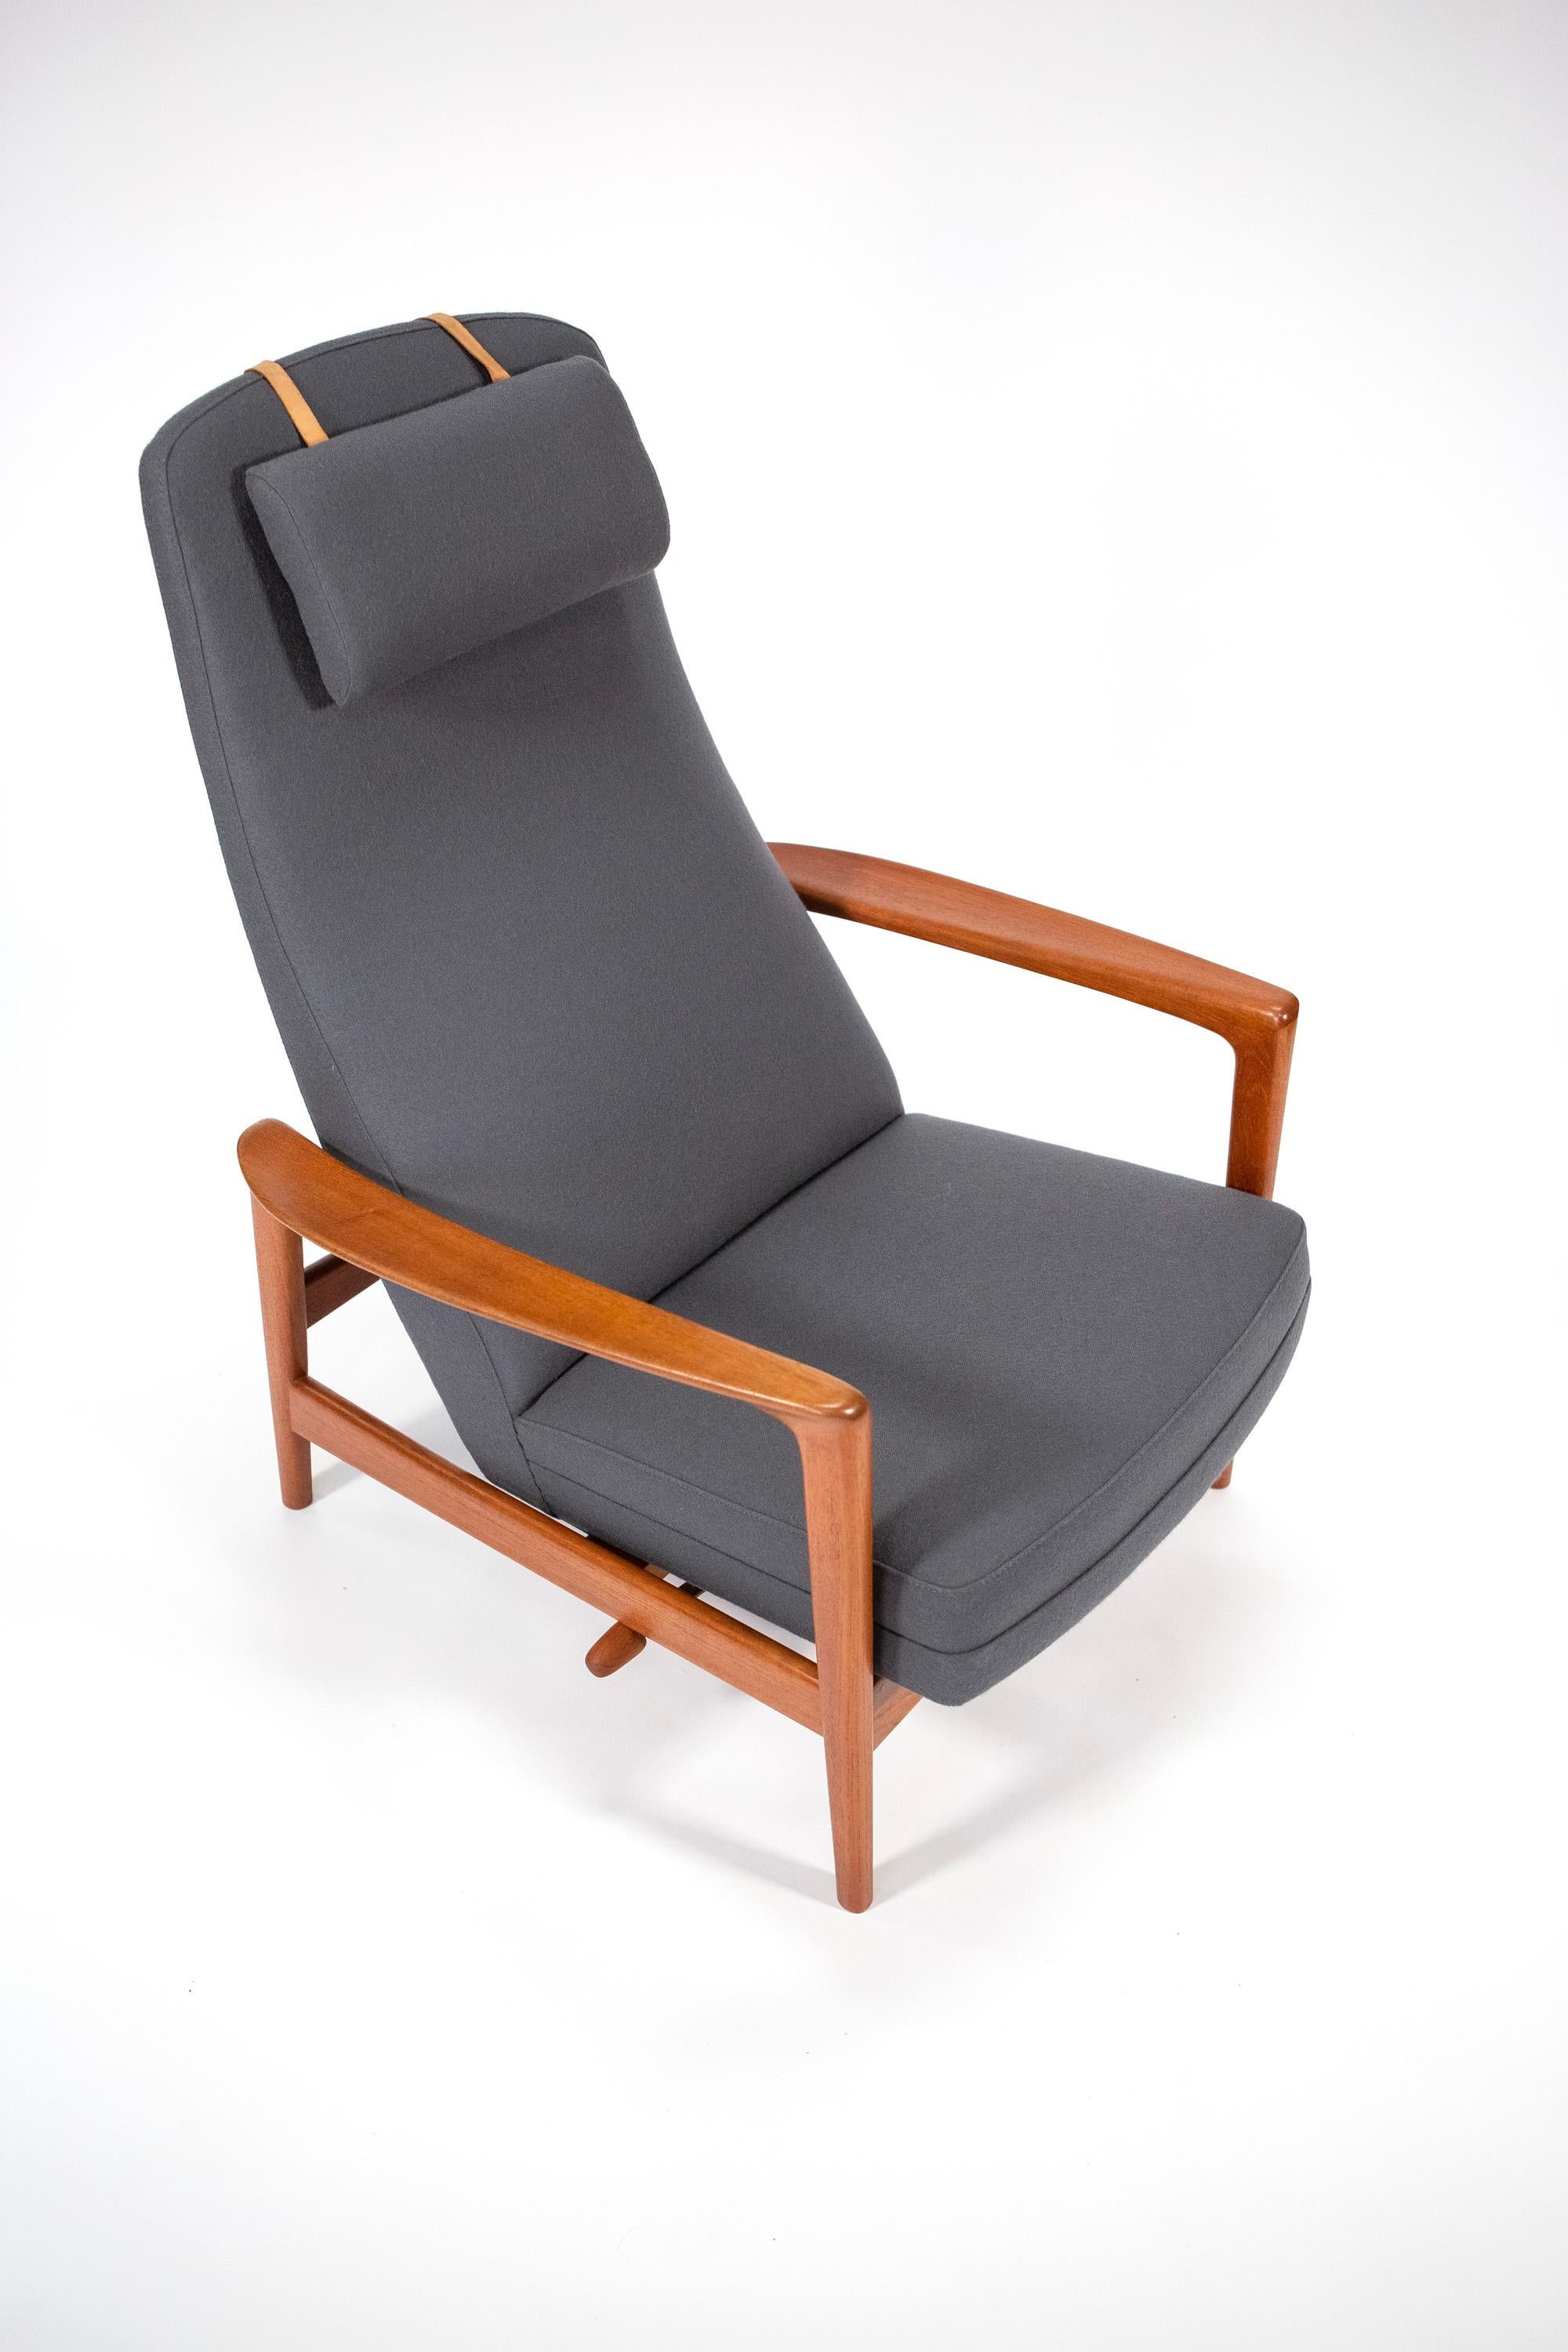 20th Century Folke Ohlsson teak 'Duxiesta' Adjustable Arm Chair by DUX - Sweden 1960's For Sale